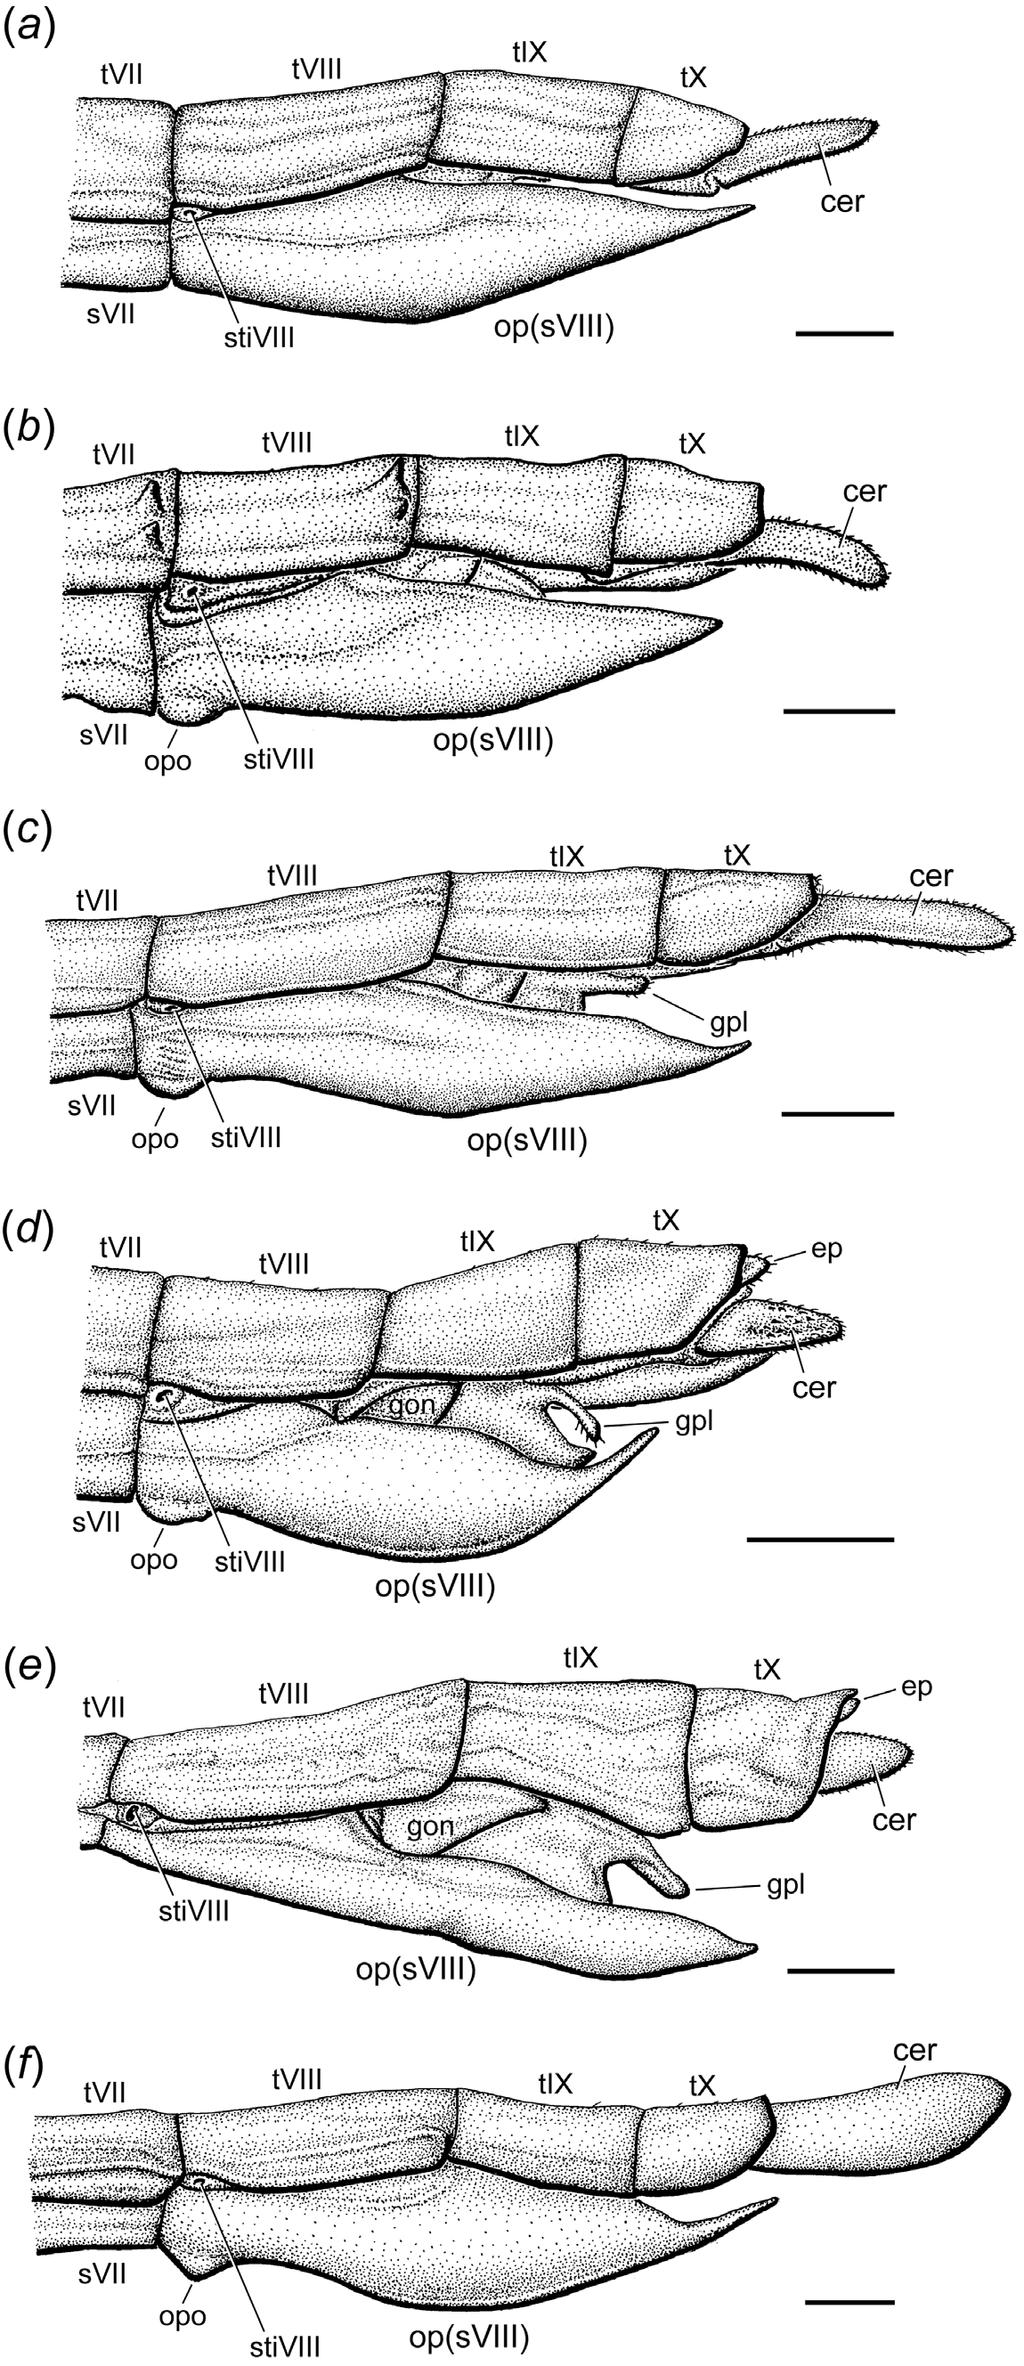 FIGURE 4. Illustrations of terminalia of Acanthoxylini females, lateral view. (a) Clitarchus hookeri; (b) C. rakauwhakanekeneke; (c) C.